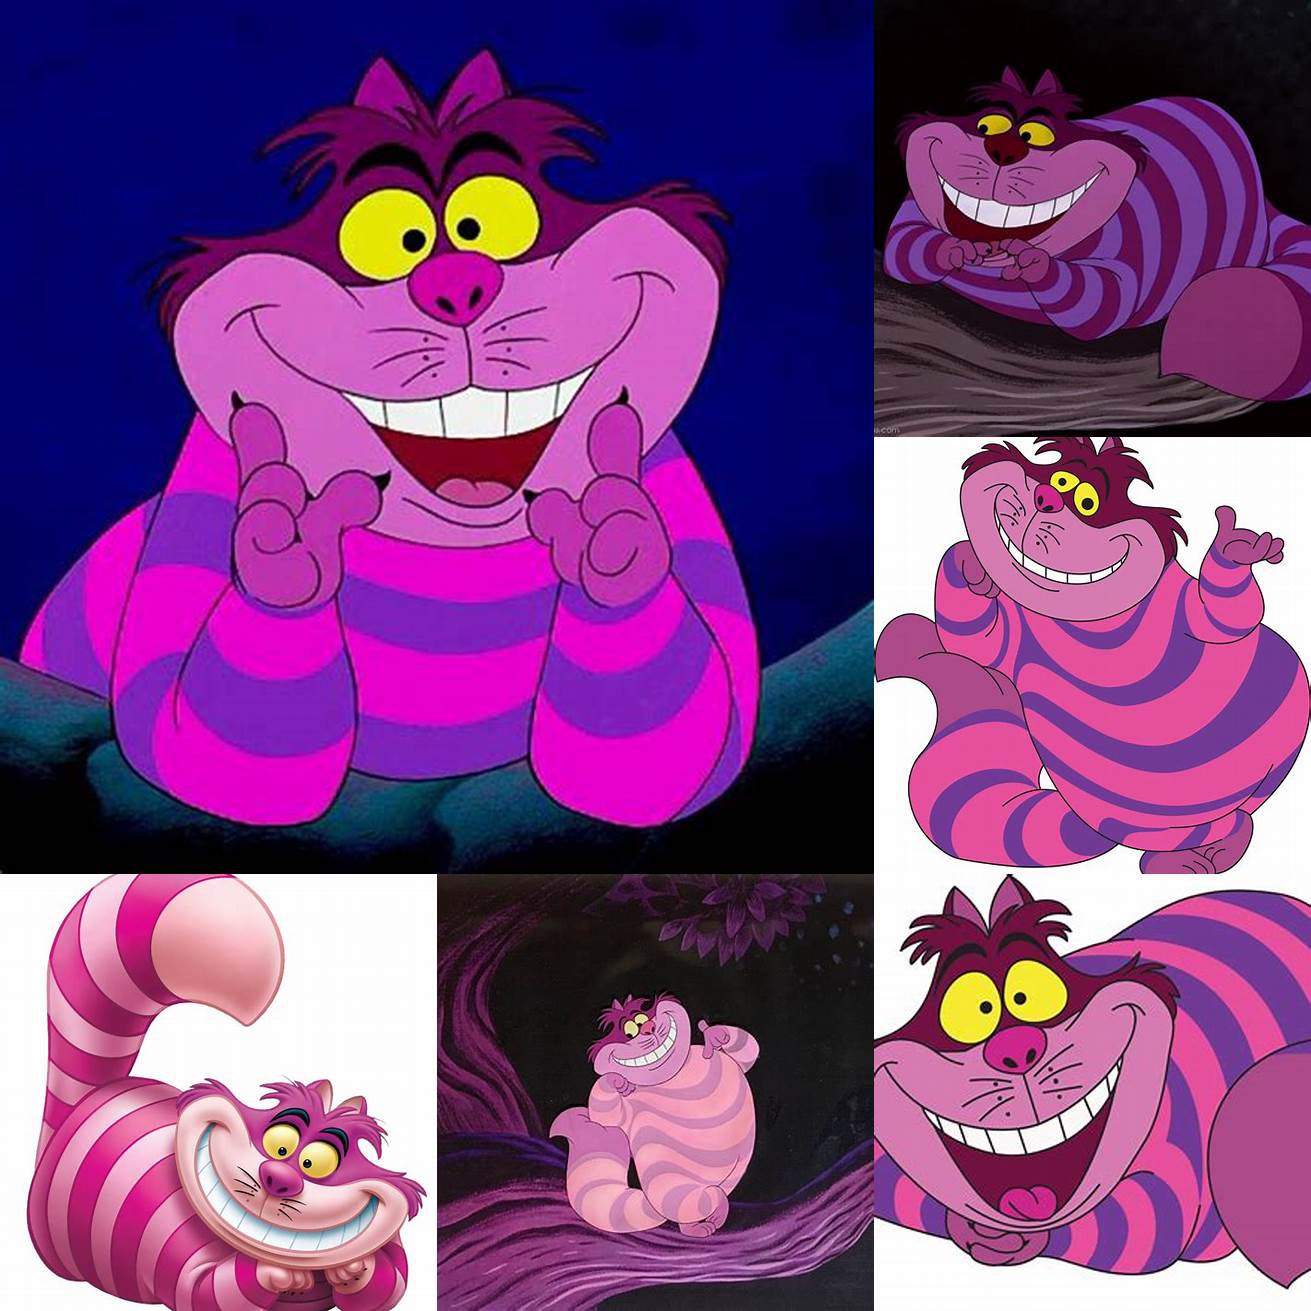 The Cheshire Cat in Disneys Alice in Wonderland